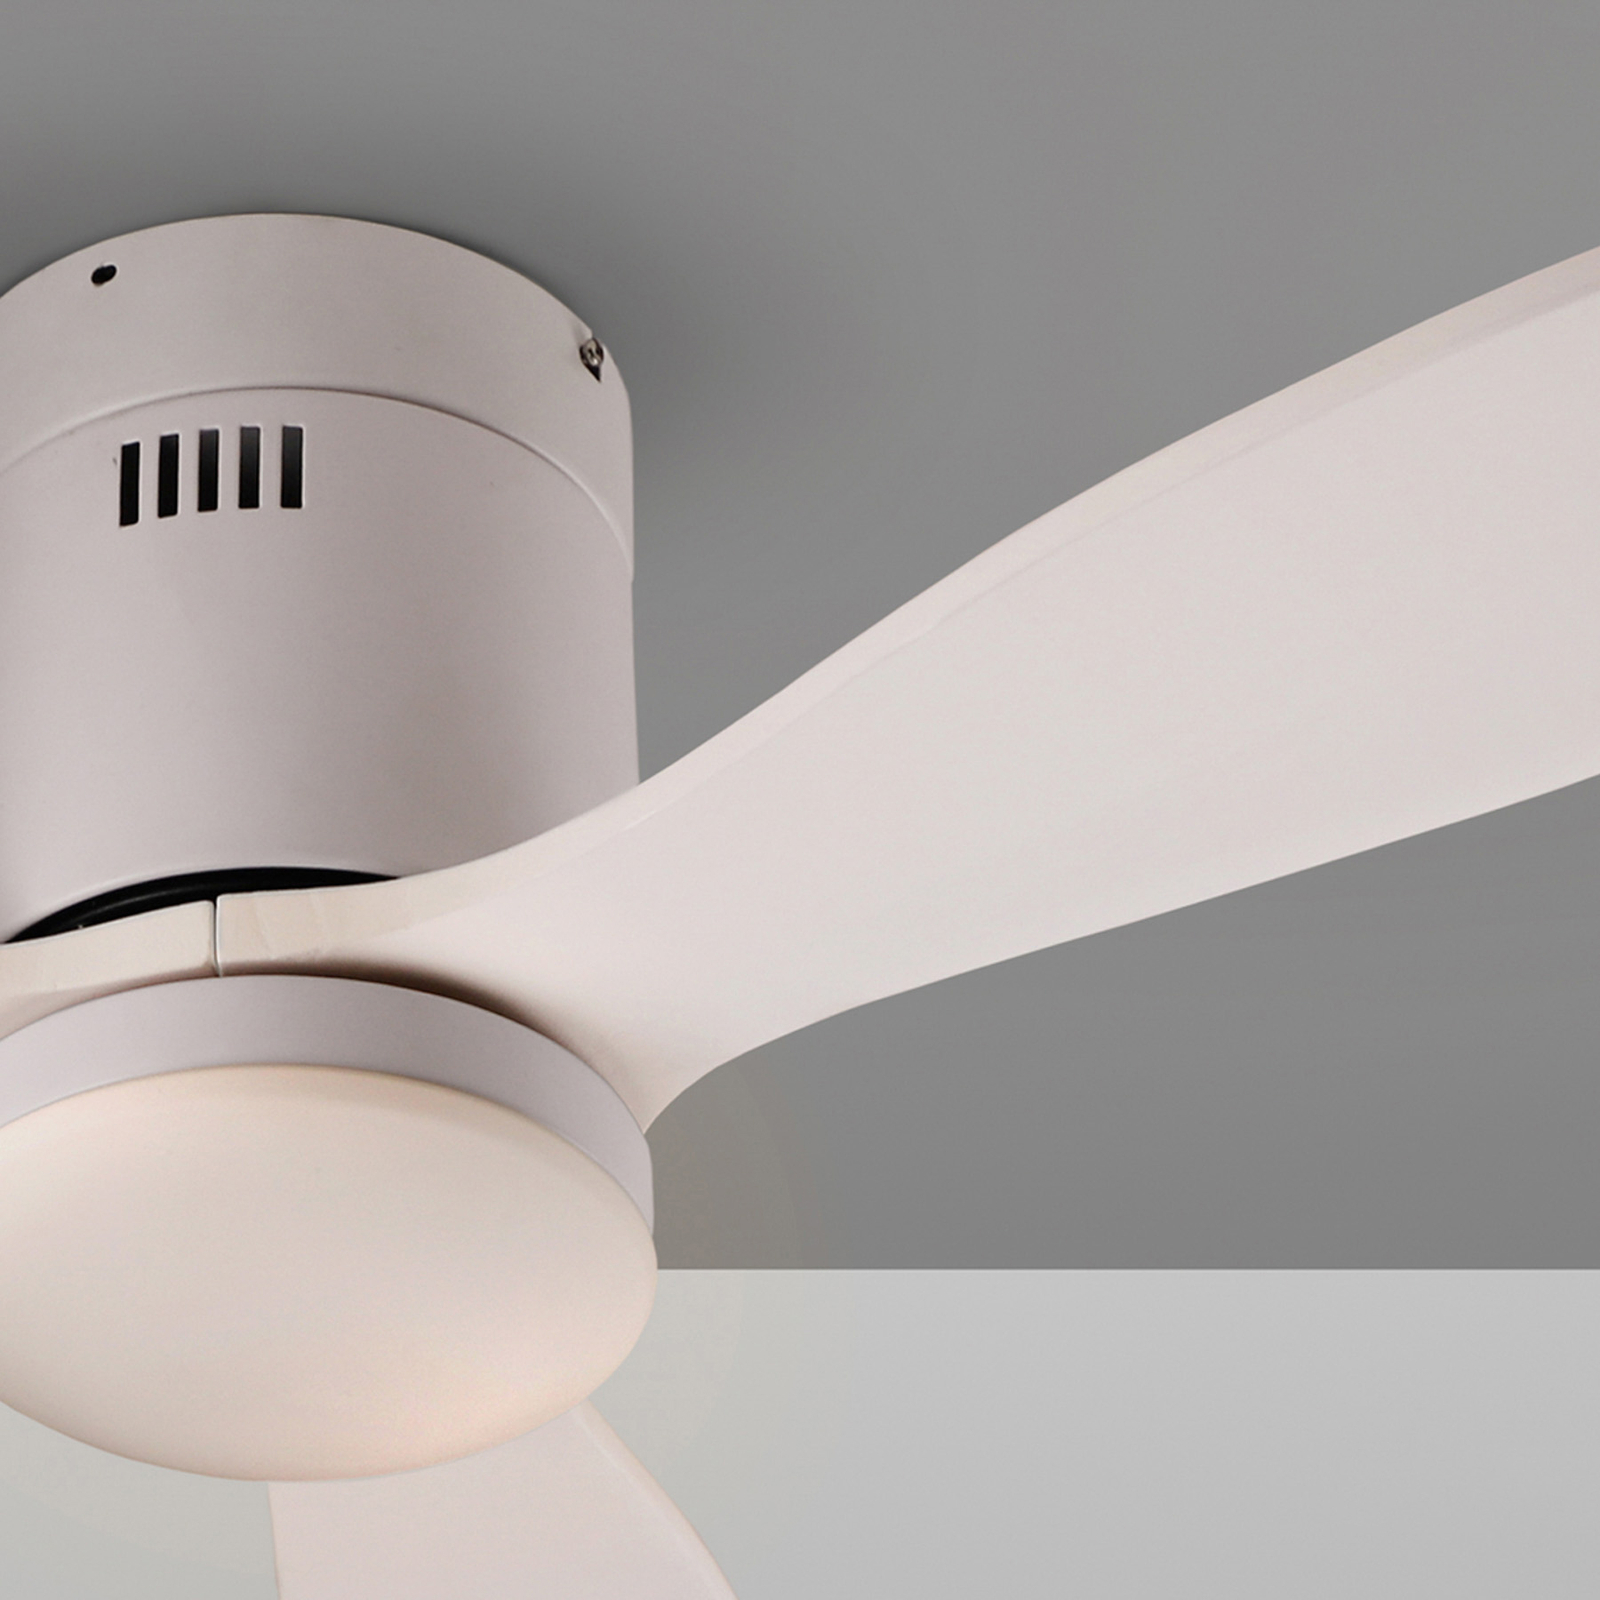 Siroco Mini LED ceiling fan, white